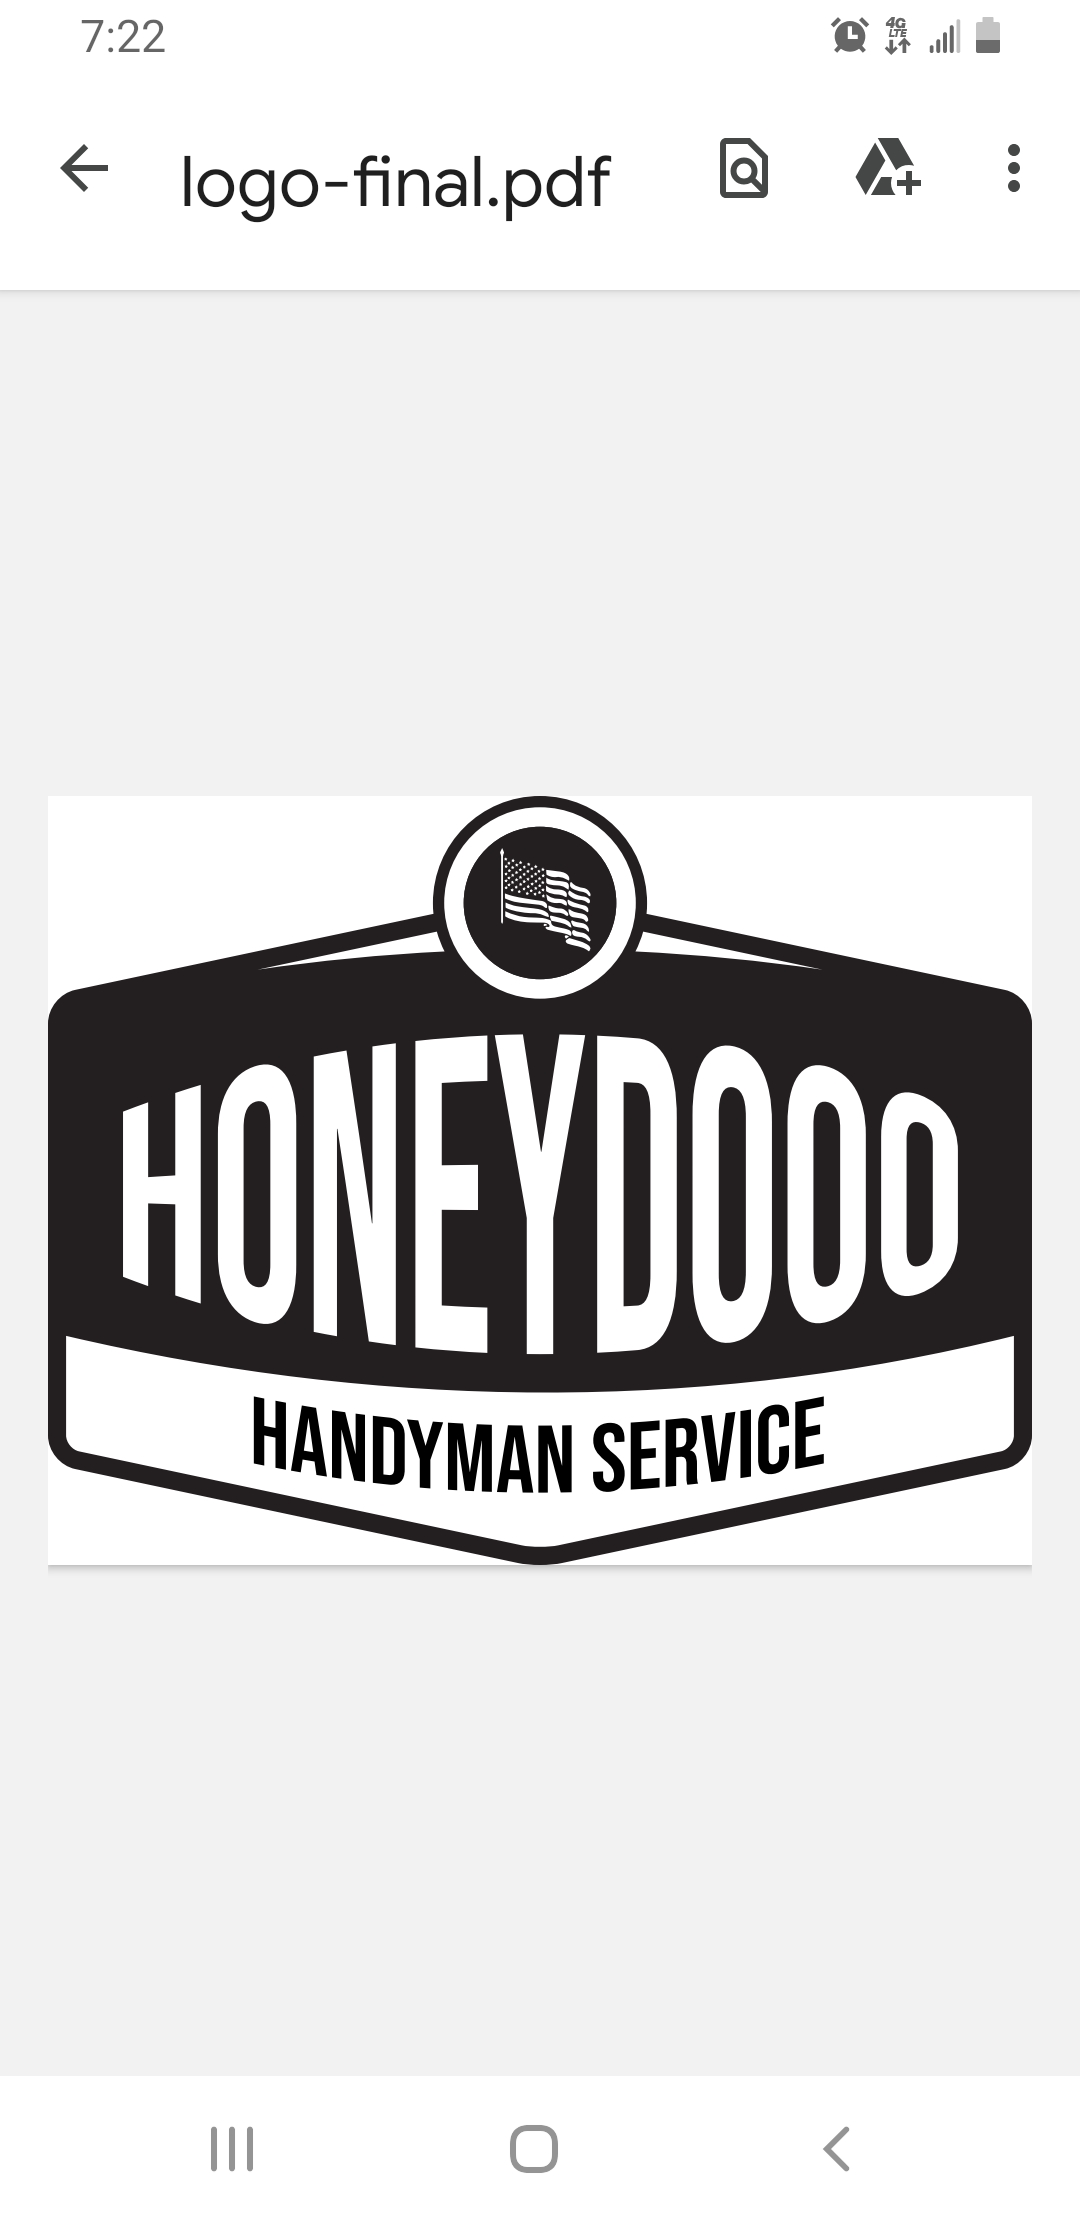 Honeydooo -- Handyman - Unlicensed Contractor Logo